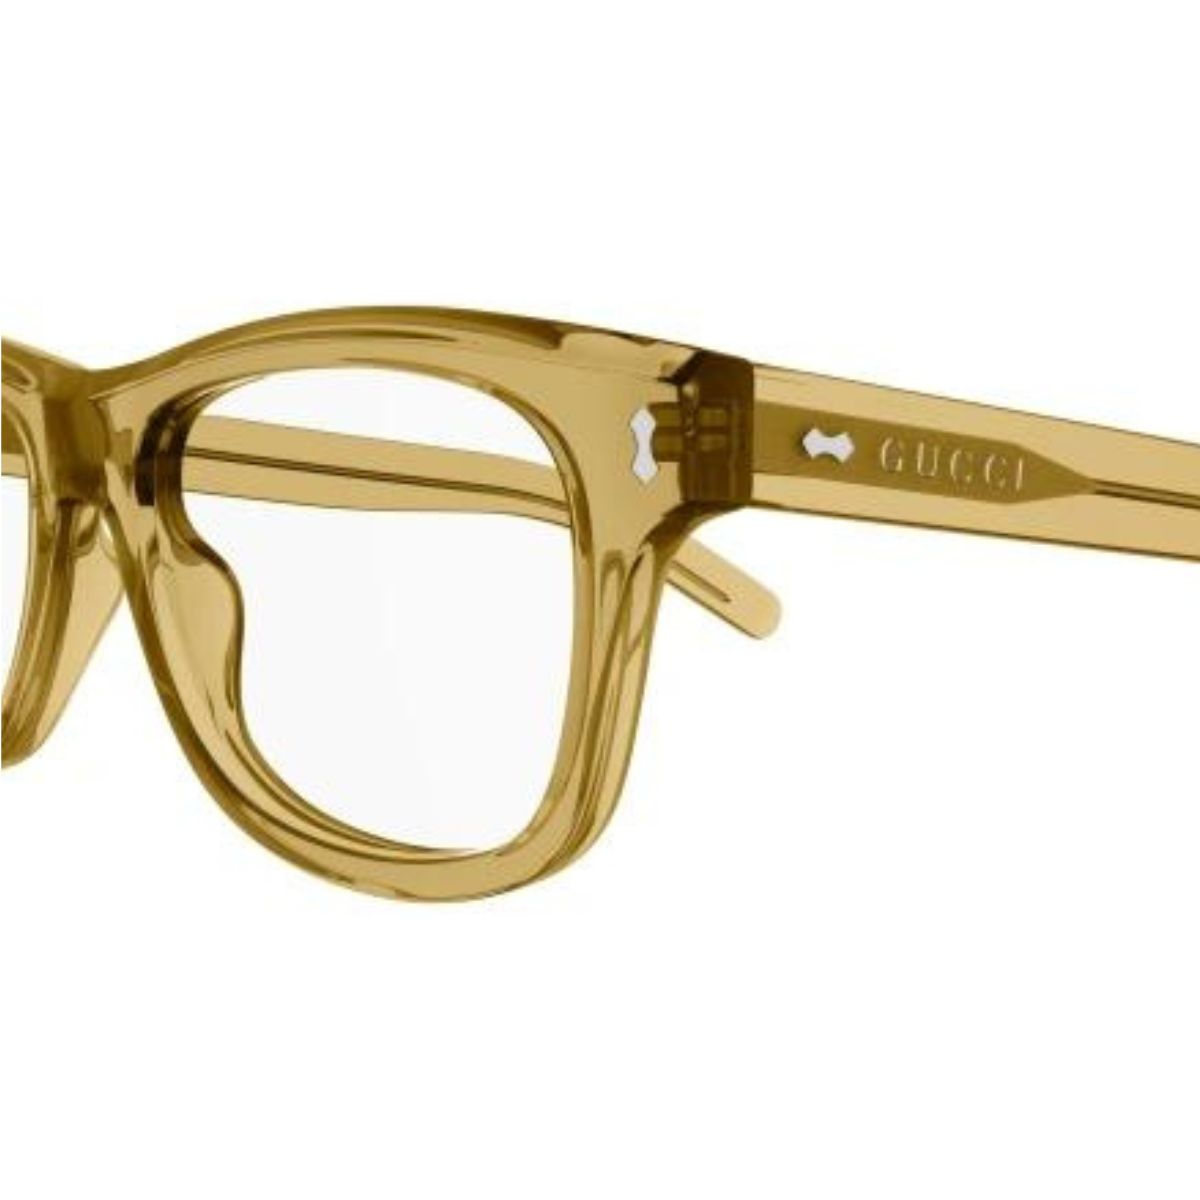 "buy Gucci 1526O 004 prescription eyewear frame for men at optorium"